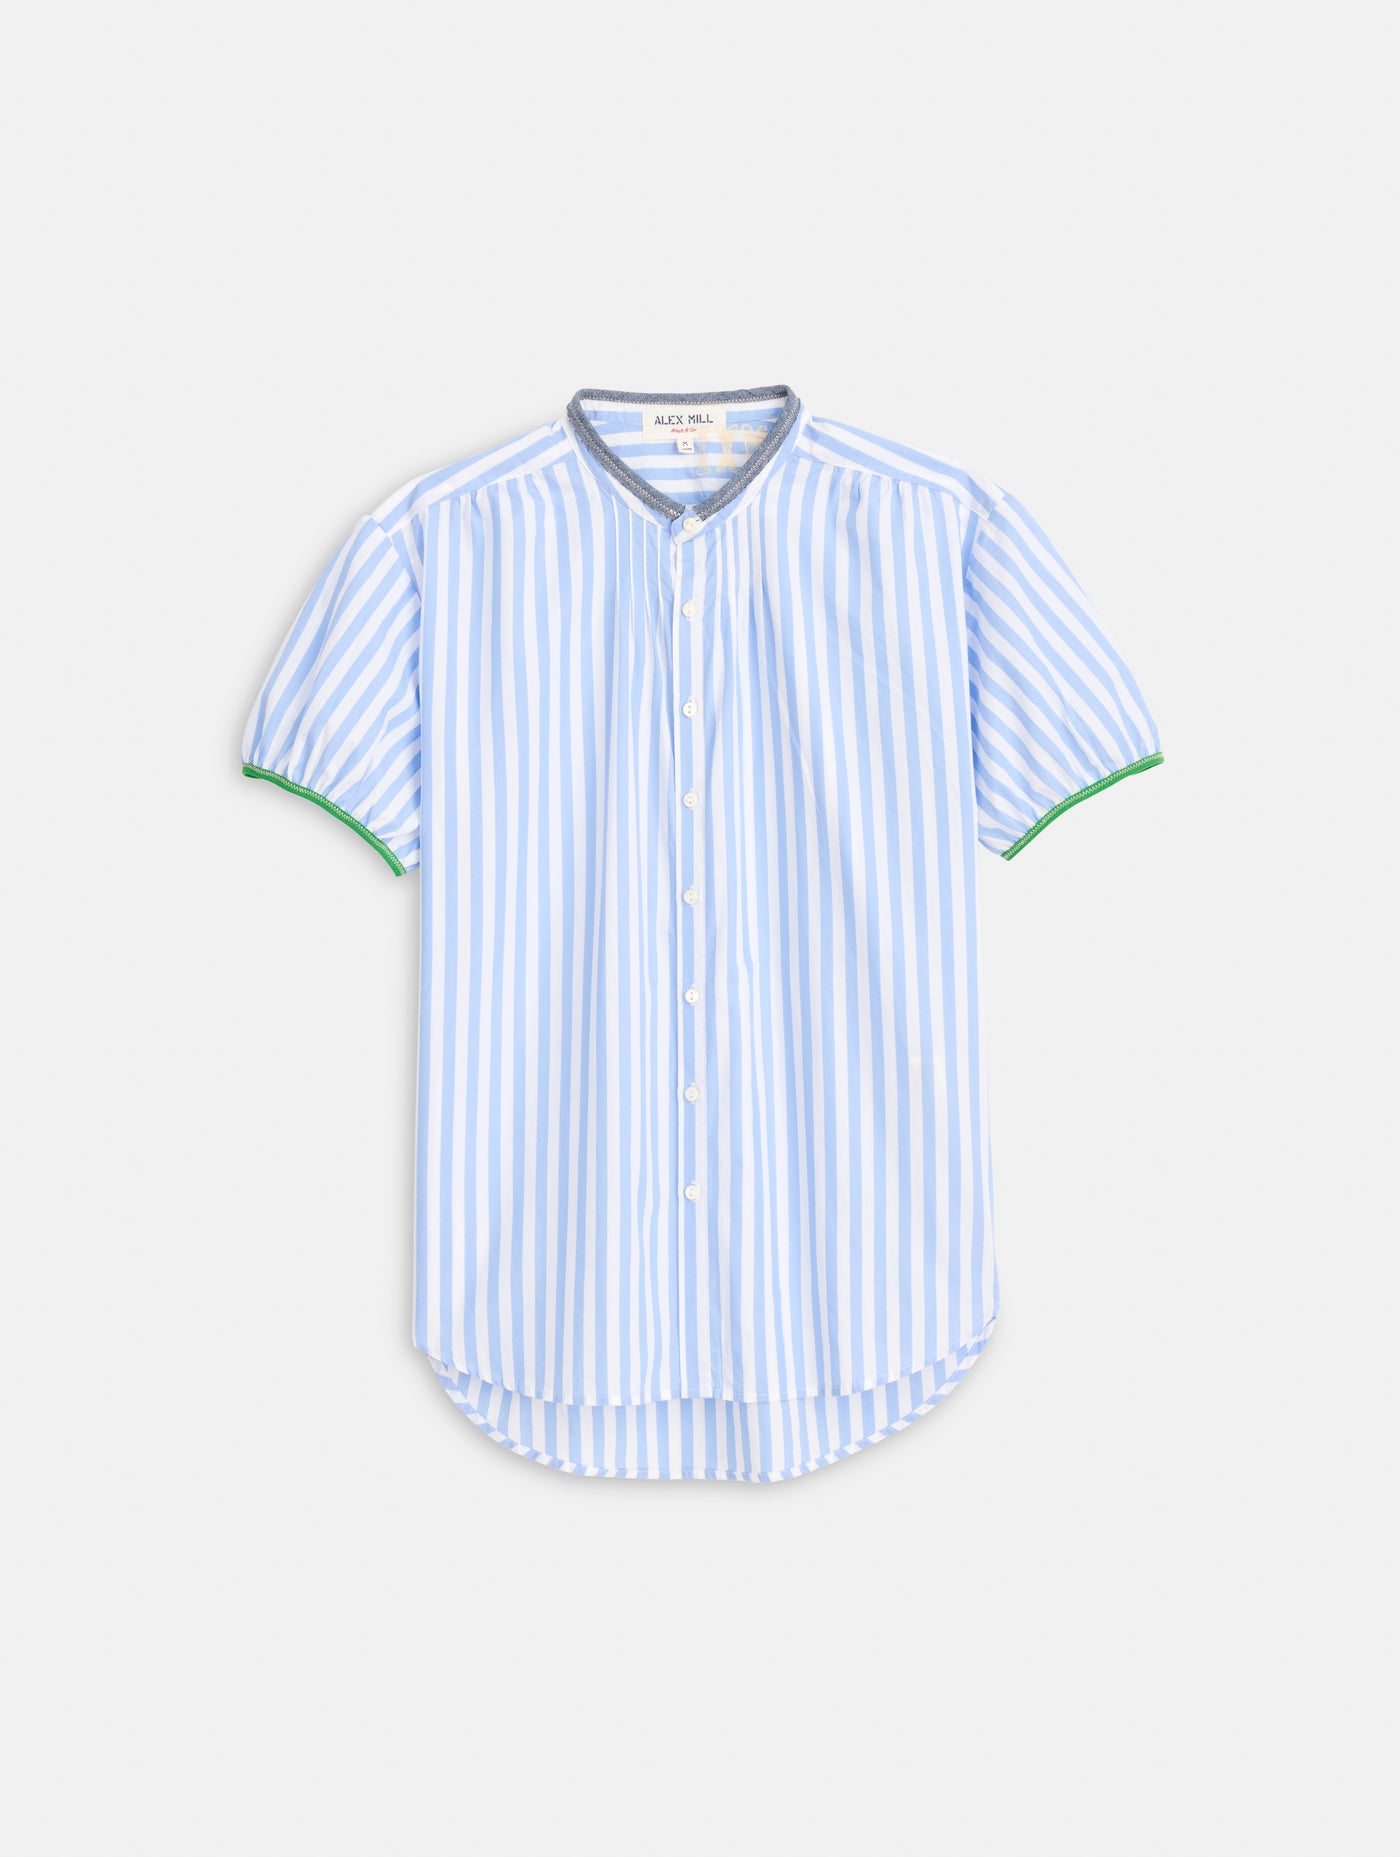 Rework Kit Shirt in Bold Stripe